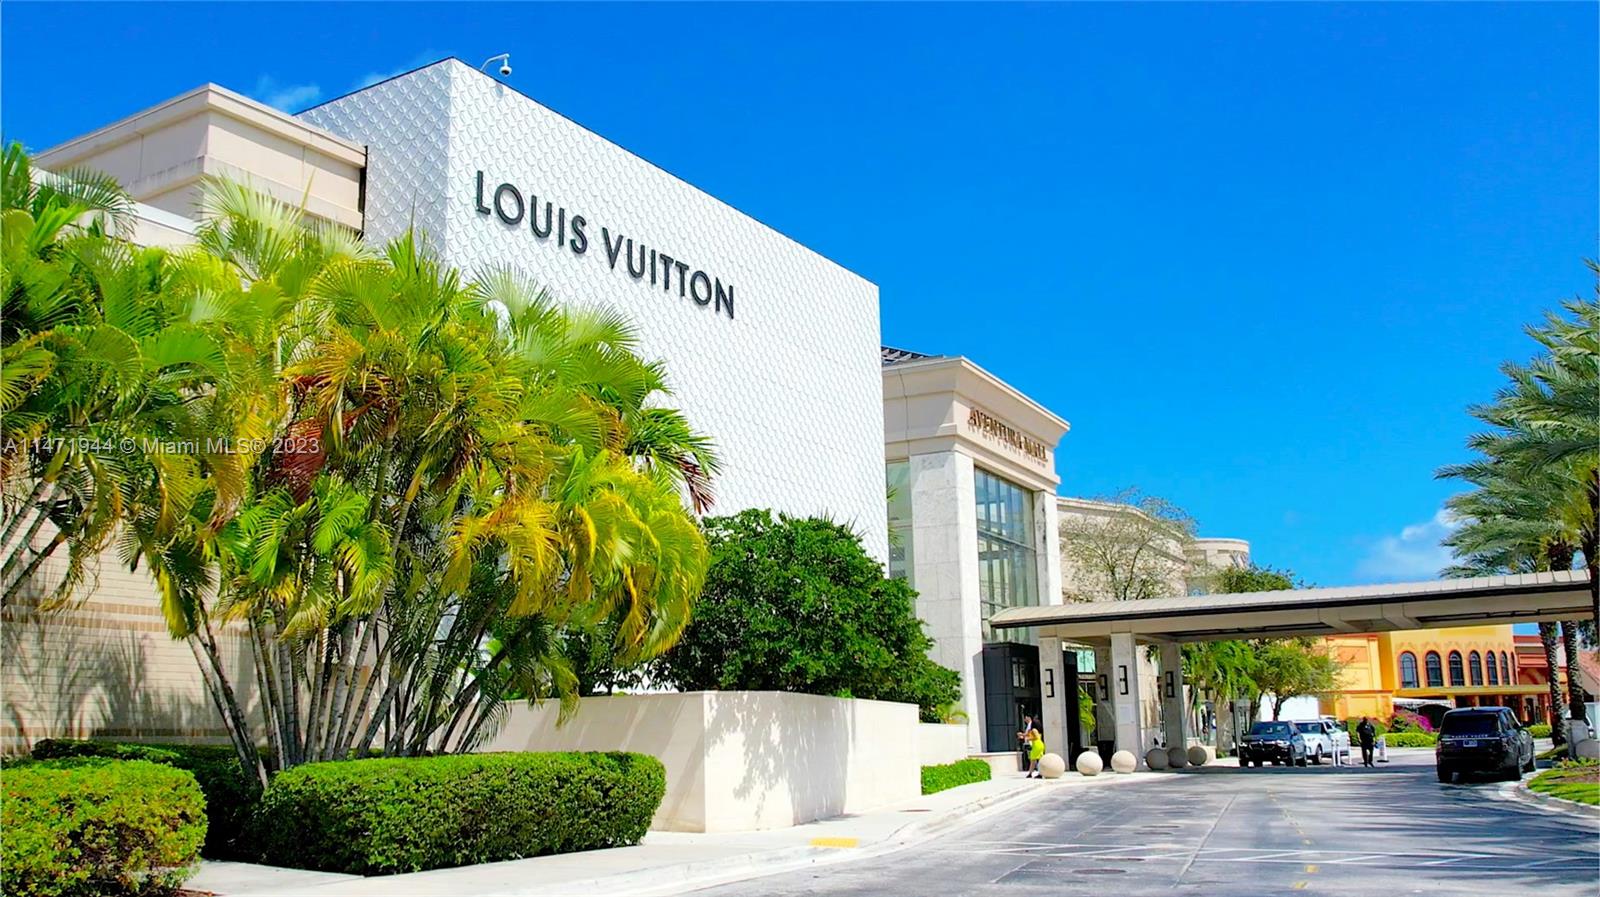 LOUIS VUITTON CLOSING DOORS AT BAL HARBOR SHOPS IN MIAMI, FL